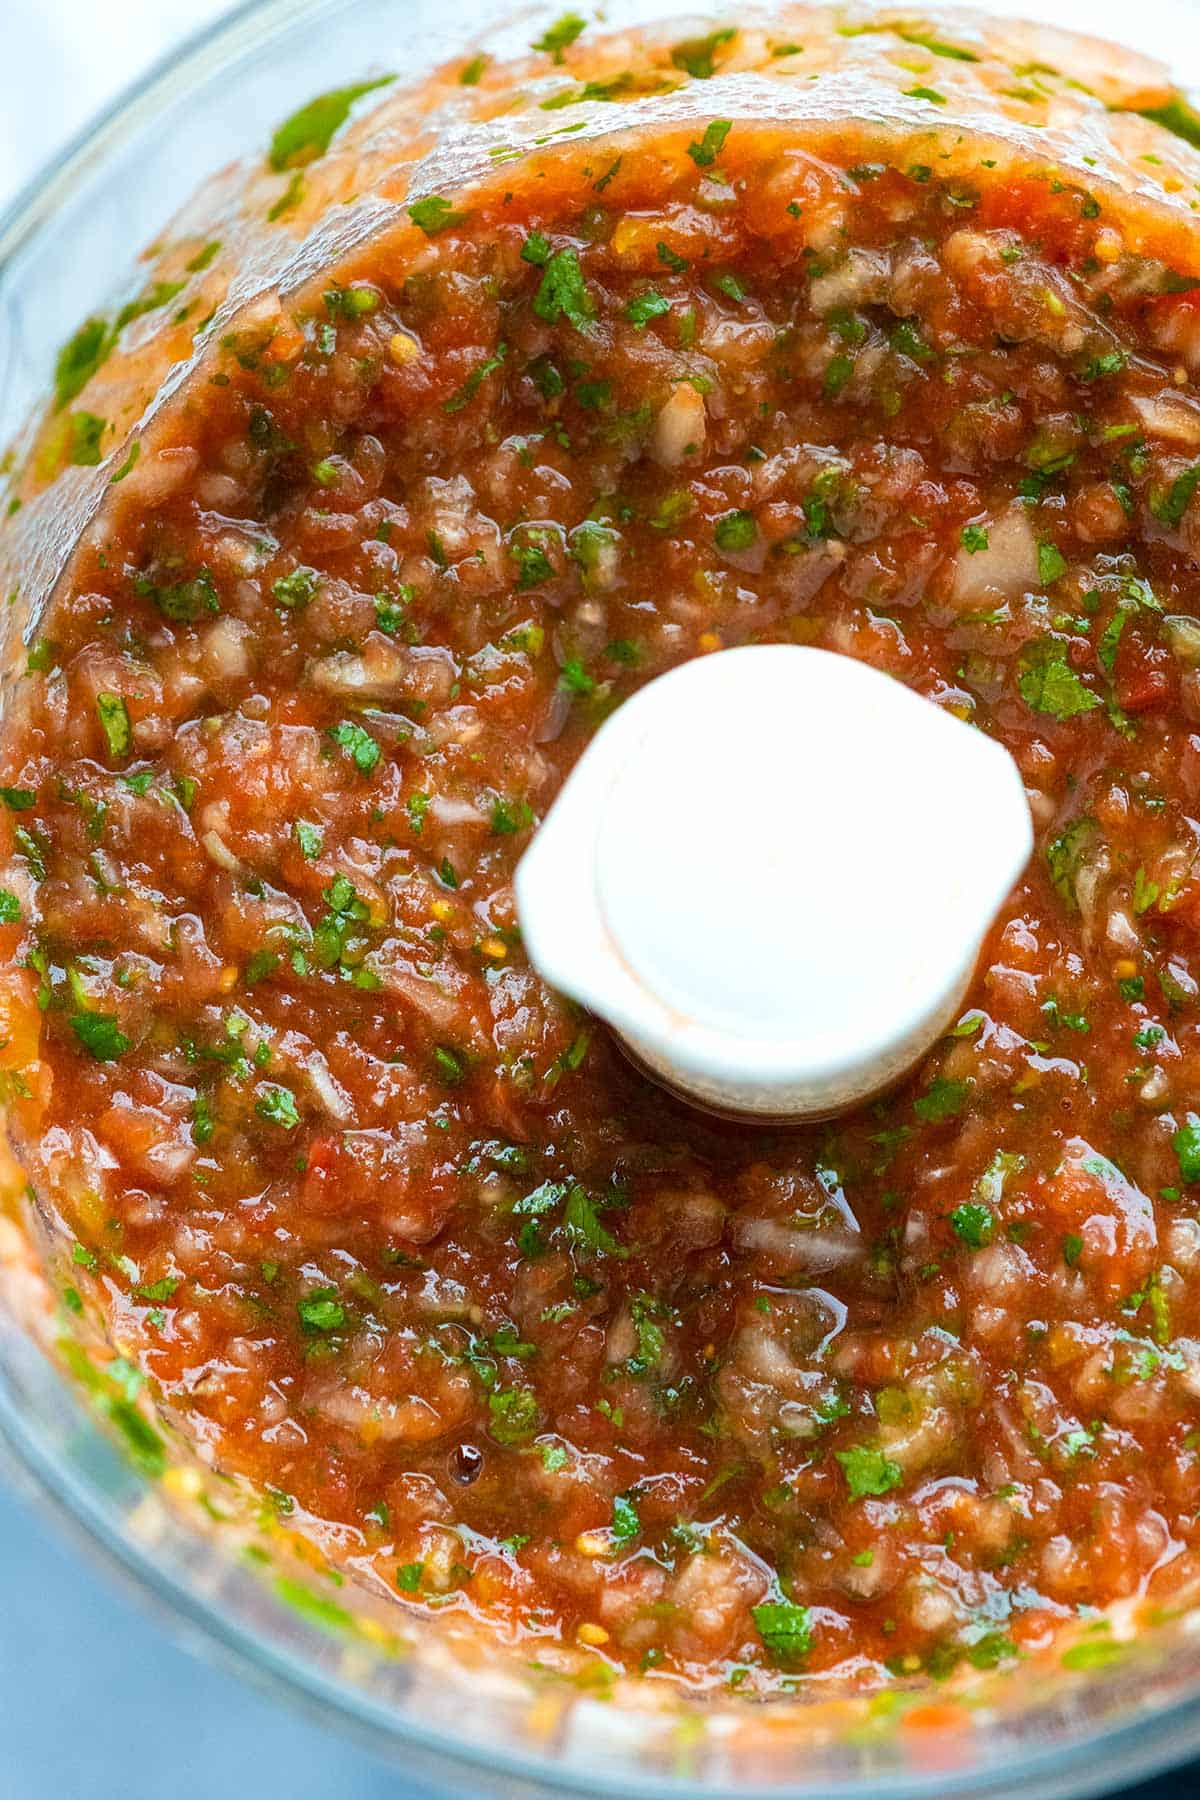 Best Homemade Salsa Recipe - How To Make Salsa